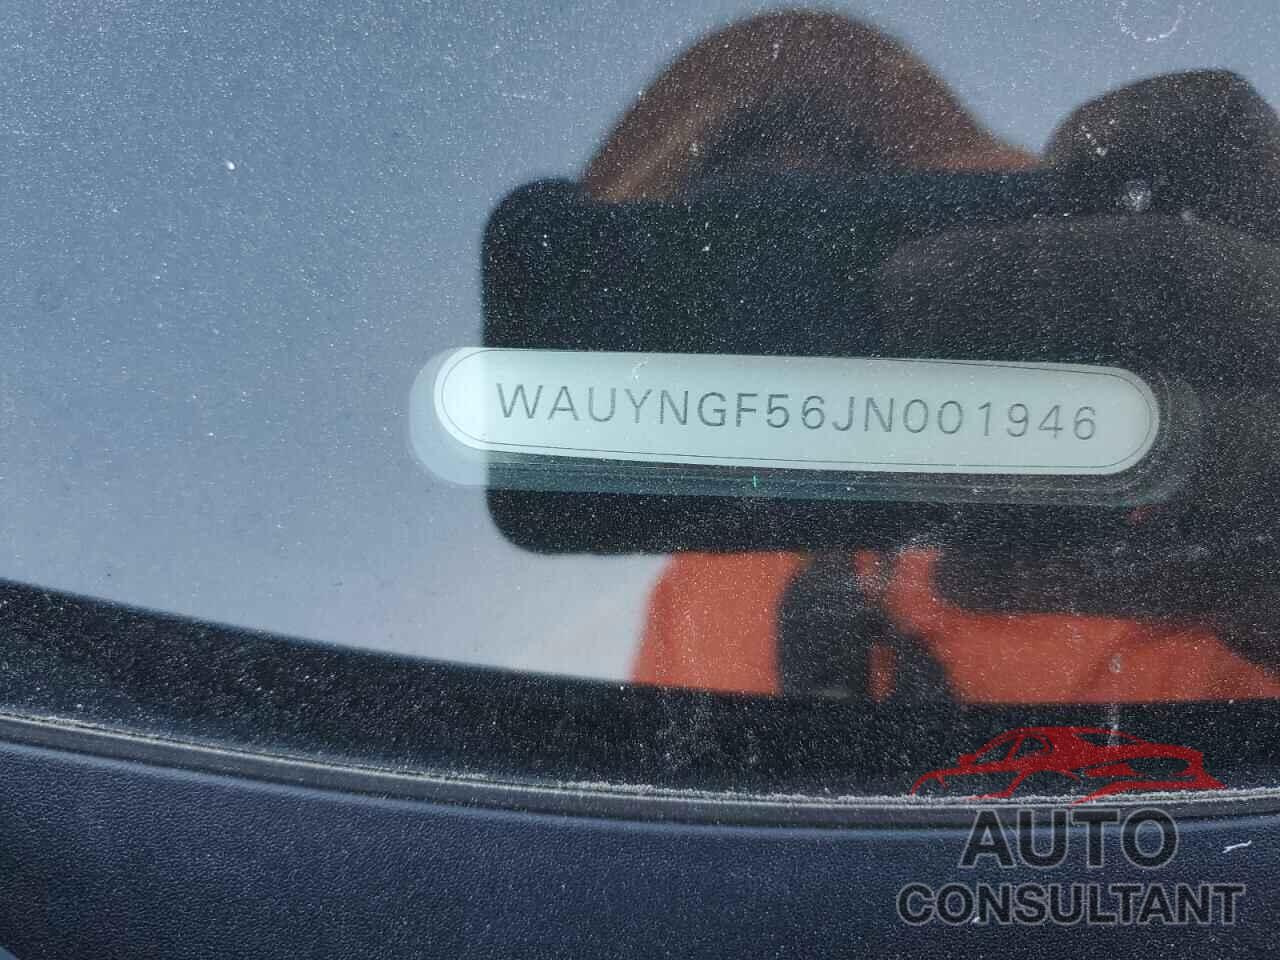 AUDI A5 2018 - WAUYNGF56JN001946